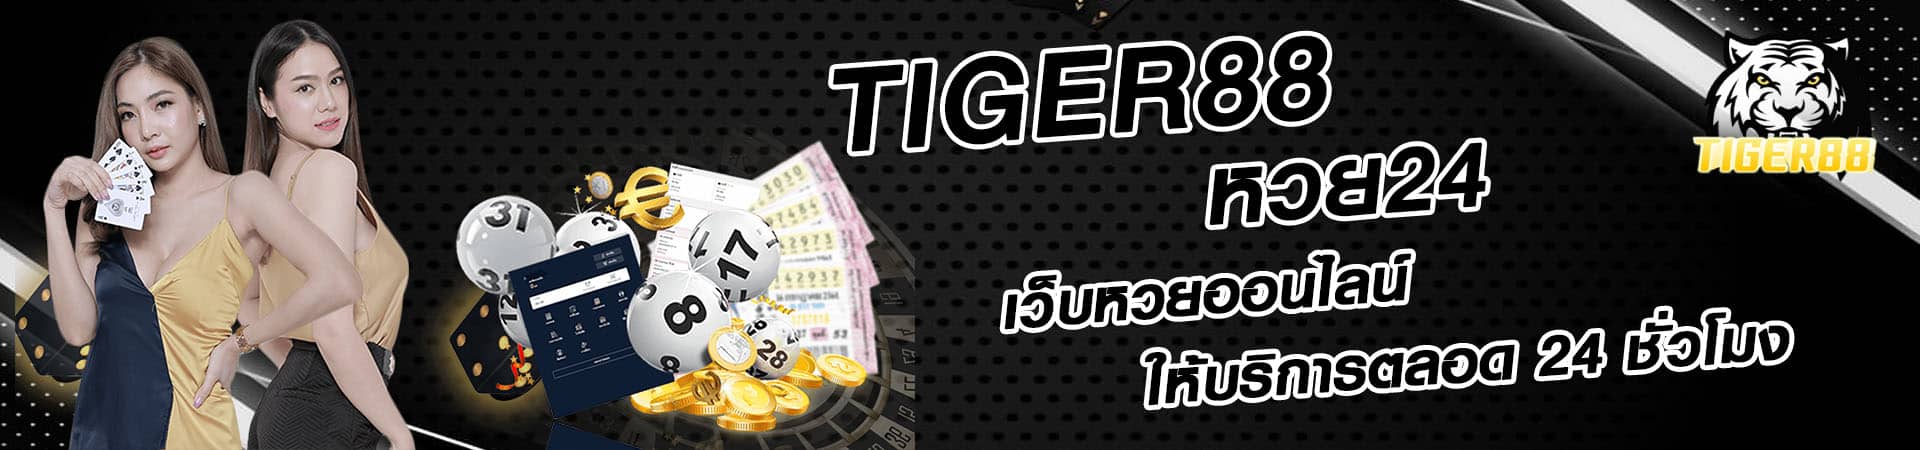 tiger88-banner1-หวย24